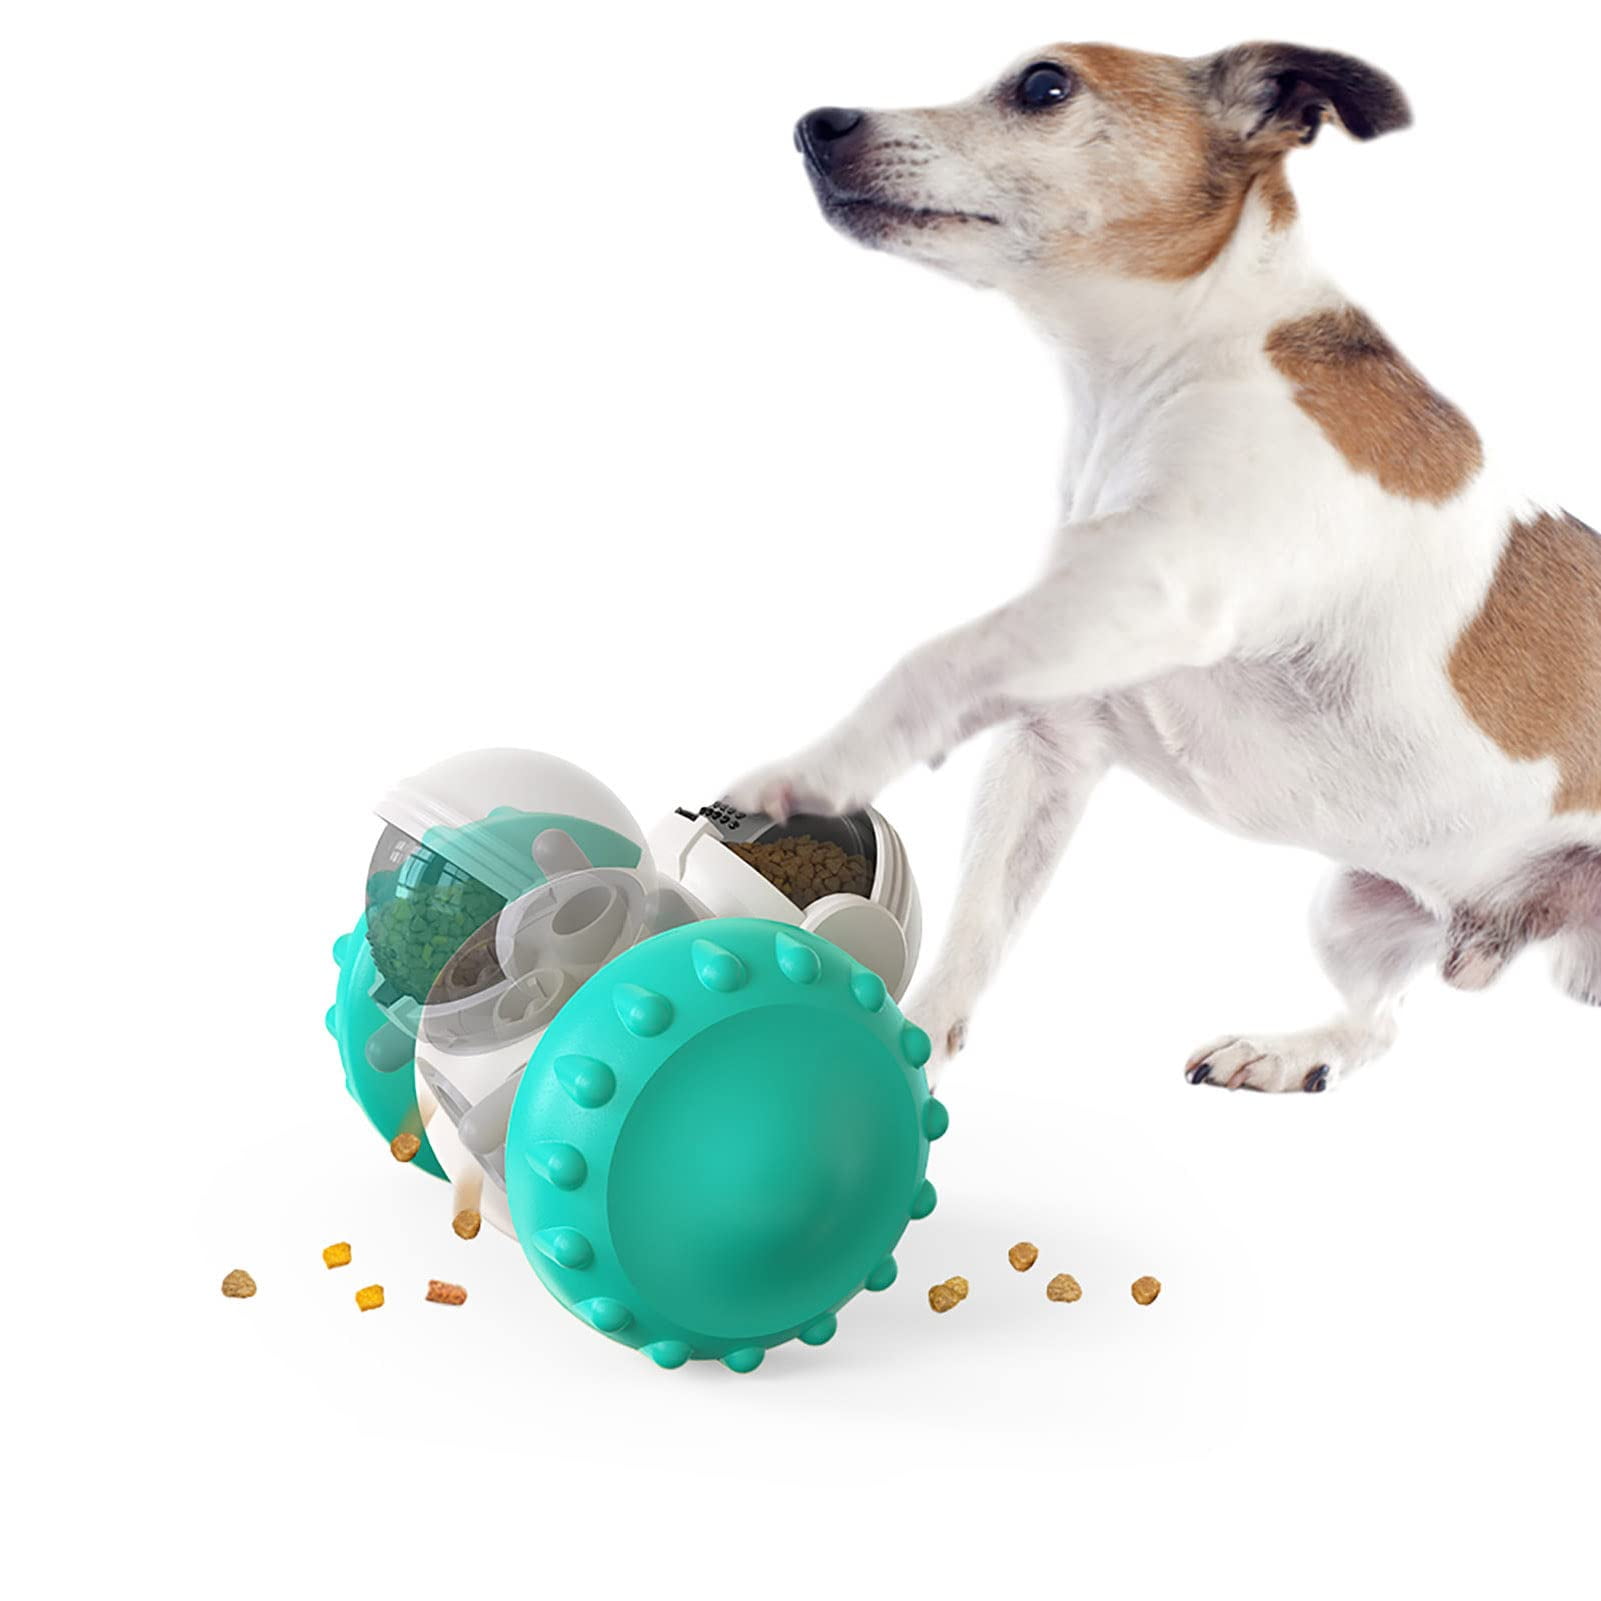 Mentally Stimulating Dog Toys  Tips & Recipes - The Dog Guide San Antonio